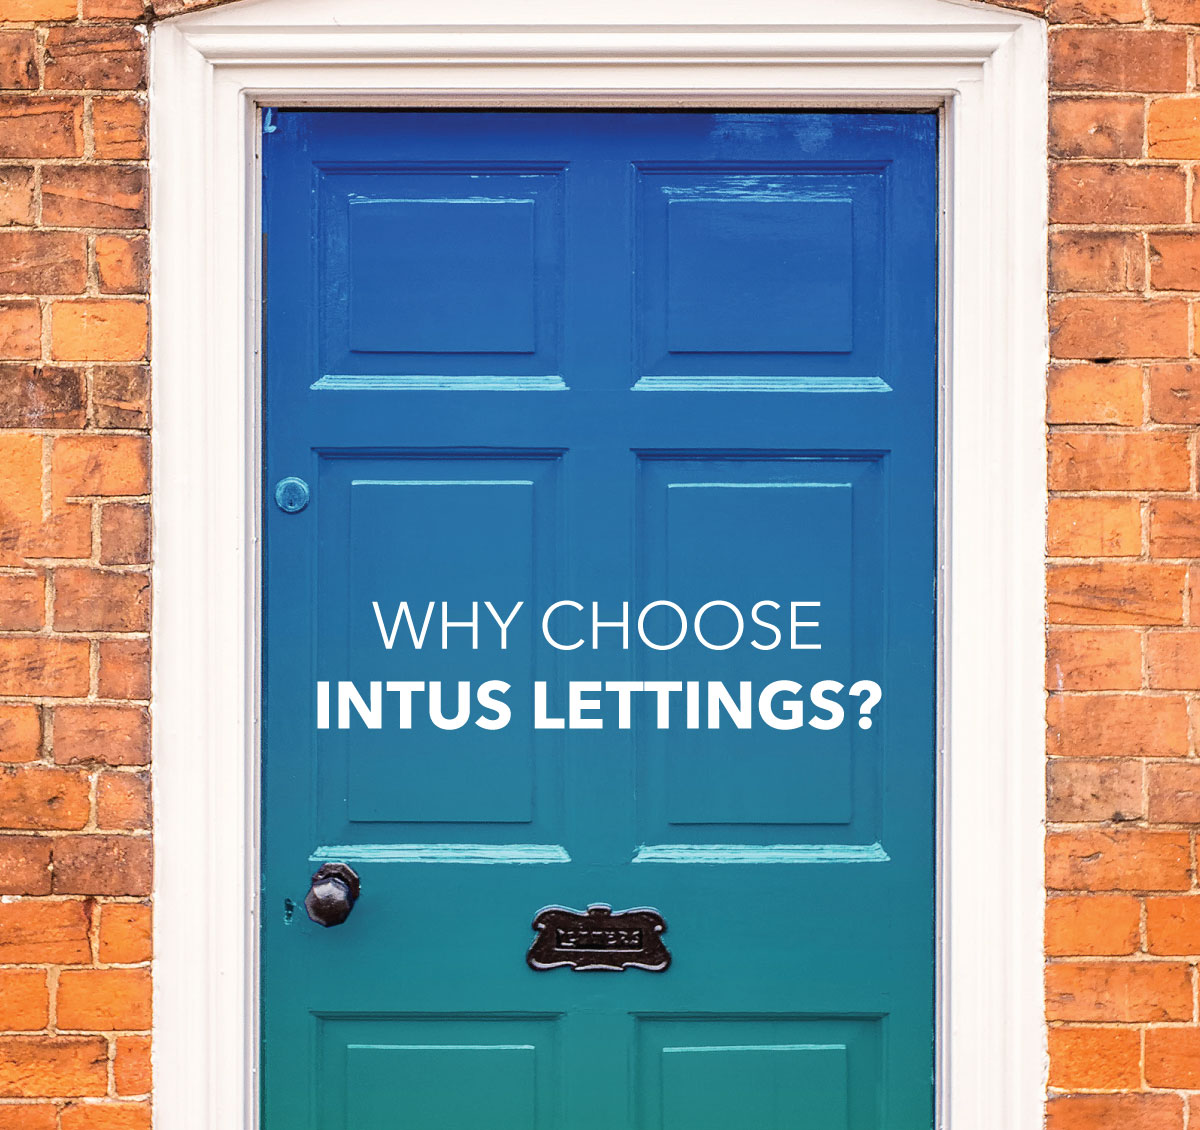 Why choose Intus Lettings?